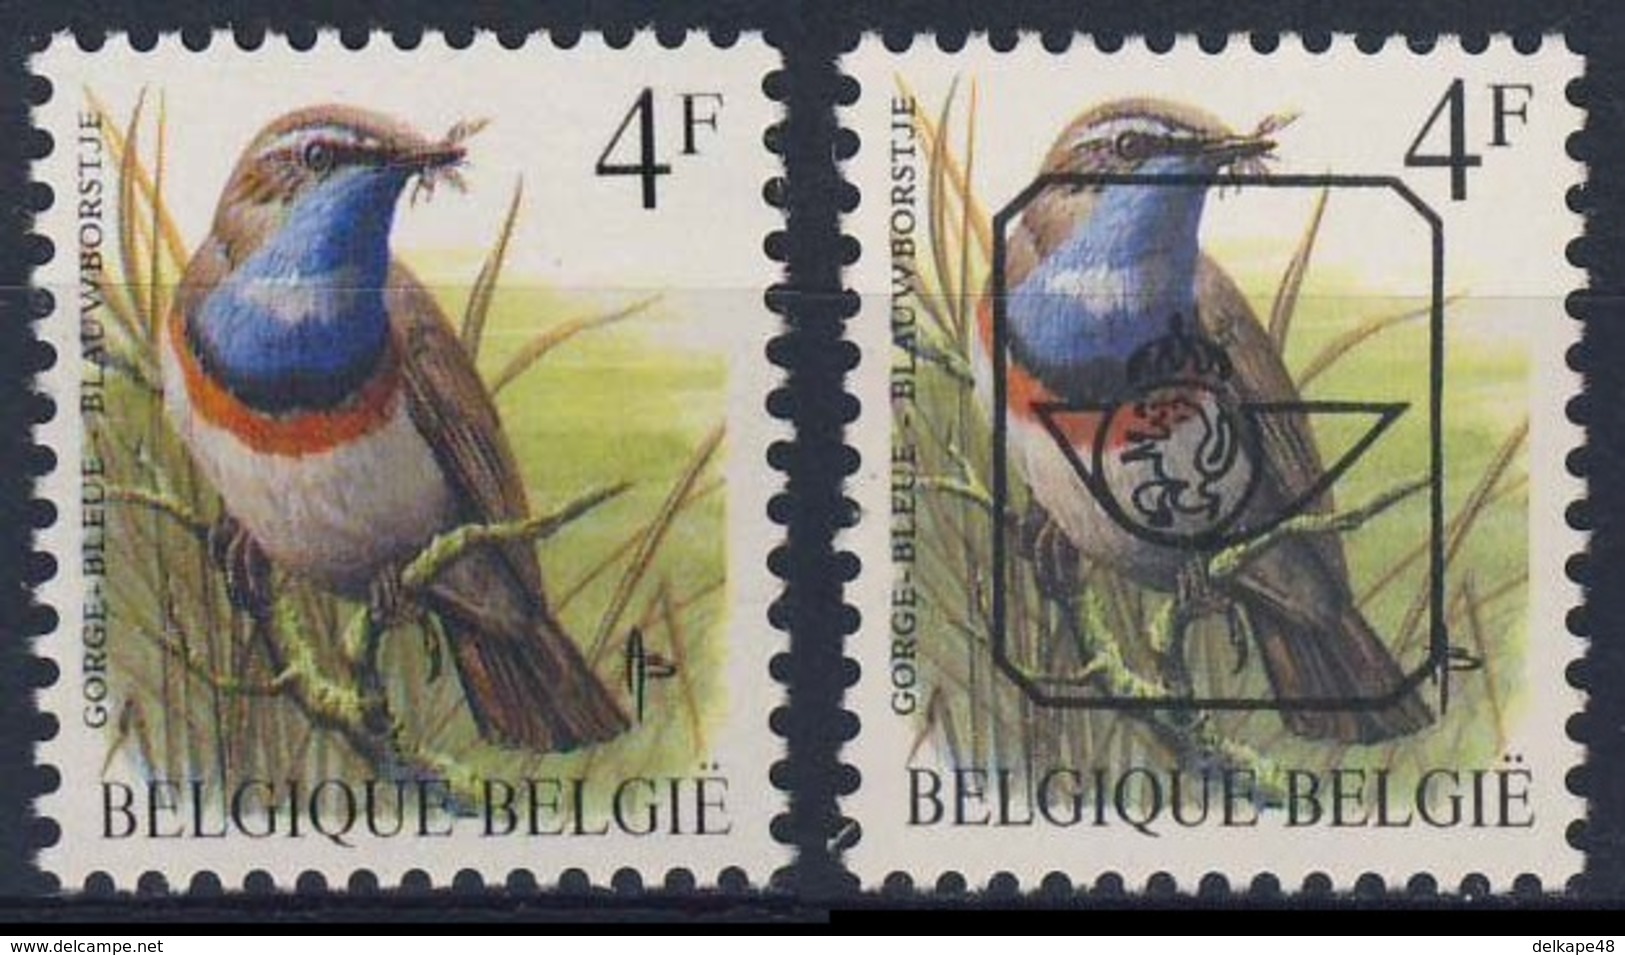 Belgie Belgique Belgium 1989 Mi 2373 YT 2321 + Precancel ** Luscinia Svecica Cyanecula : Bluethroat/ Gorge-bleue Commune - Ongebruikt